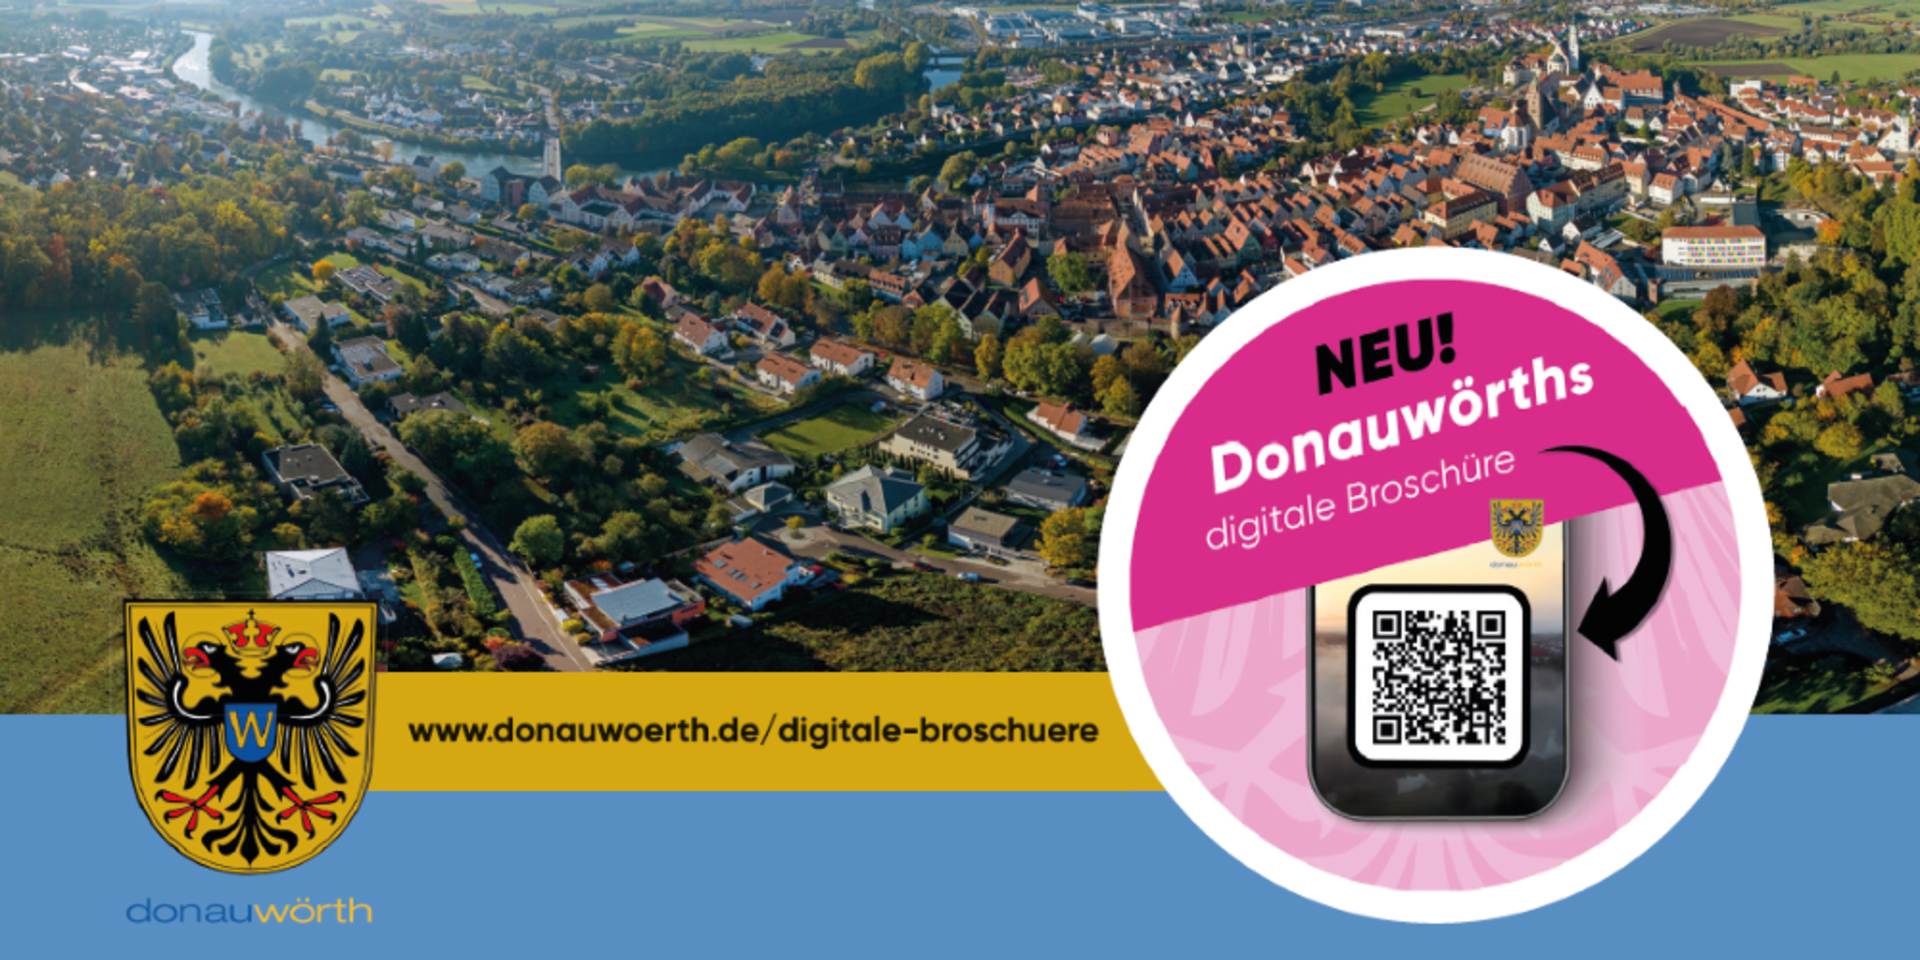 csm Donauwoerth digitale Broschuere Luftbild 11ffe7b975